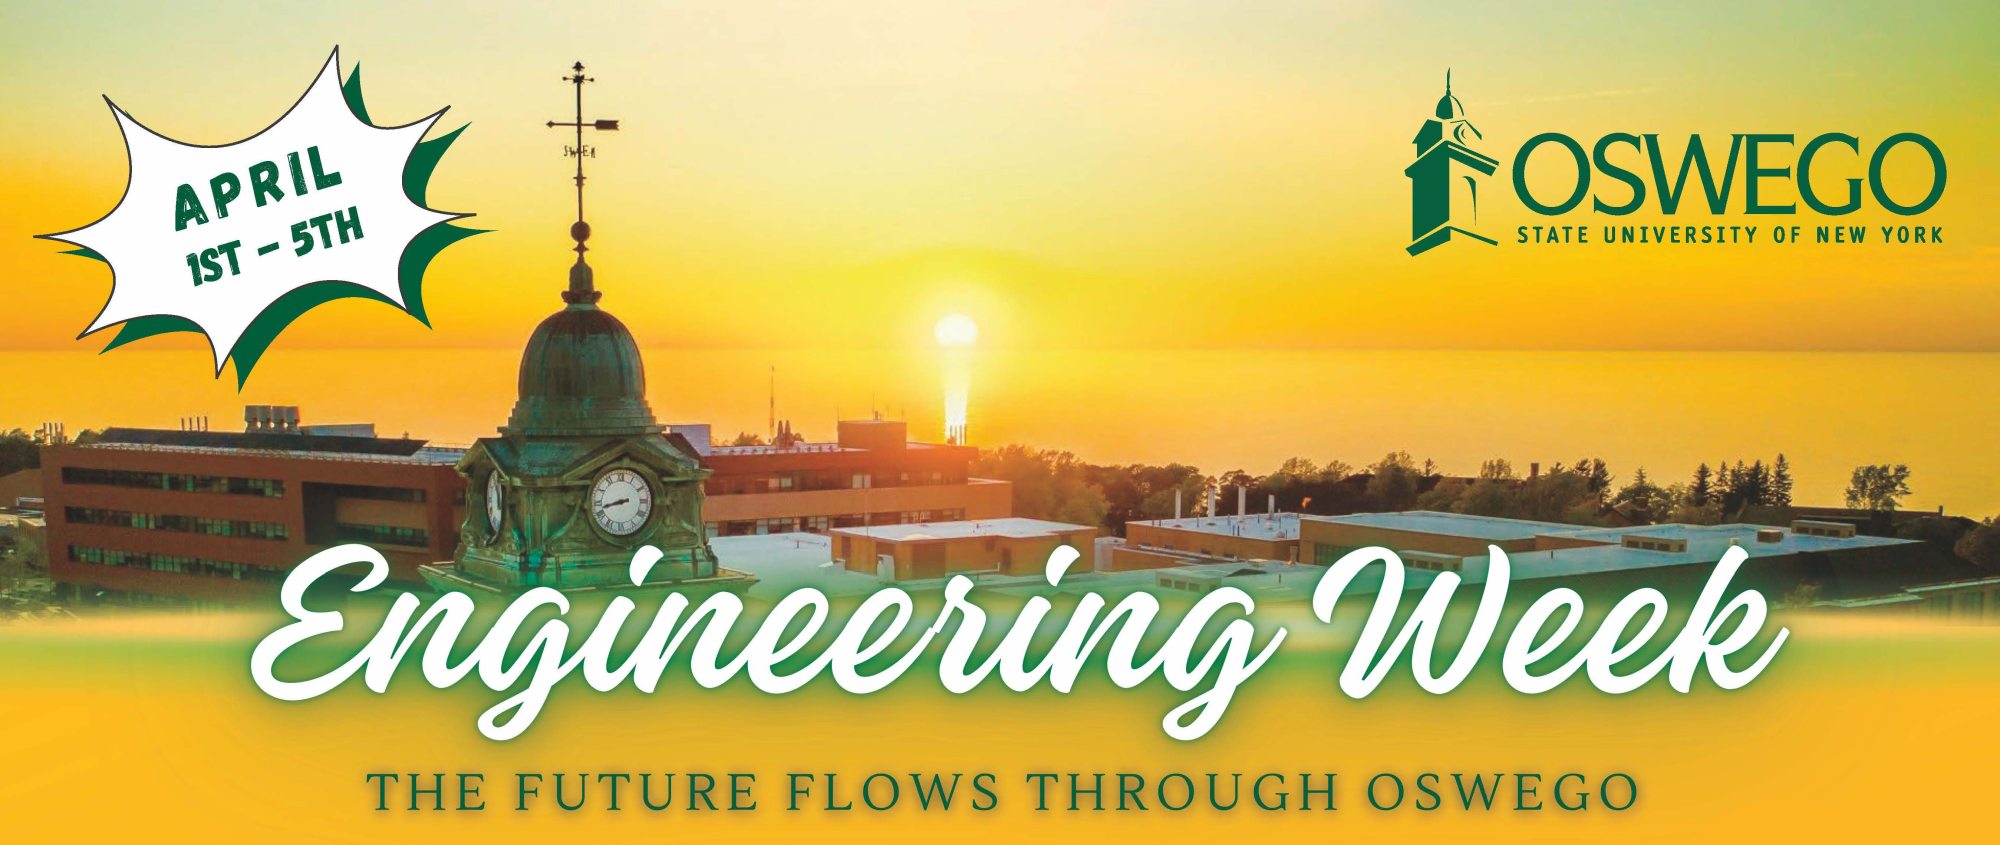 April 1-5, Engineering Week. The future flows through Oswego.